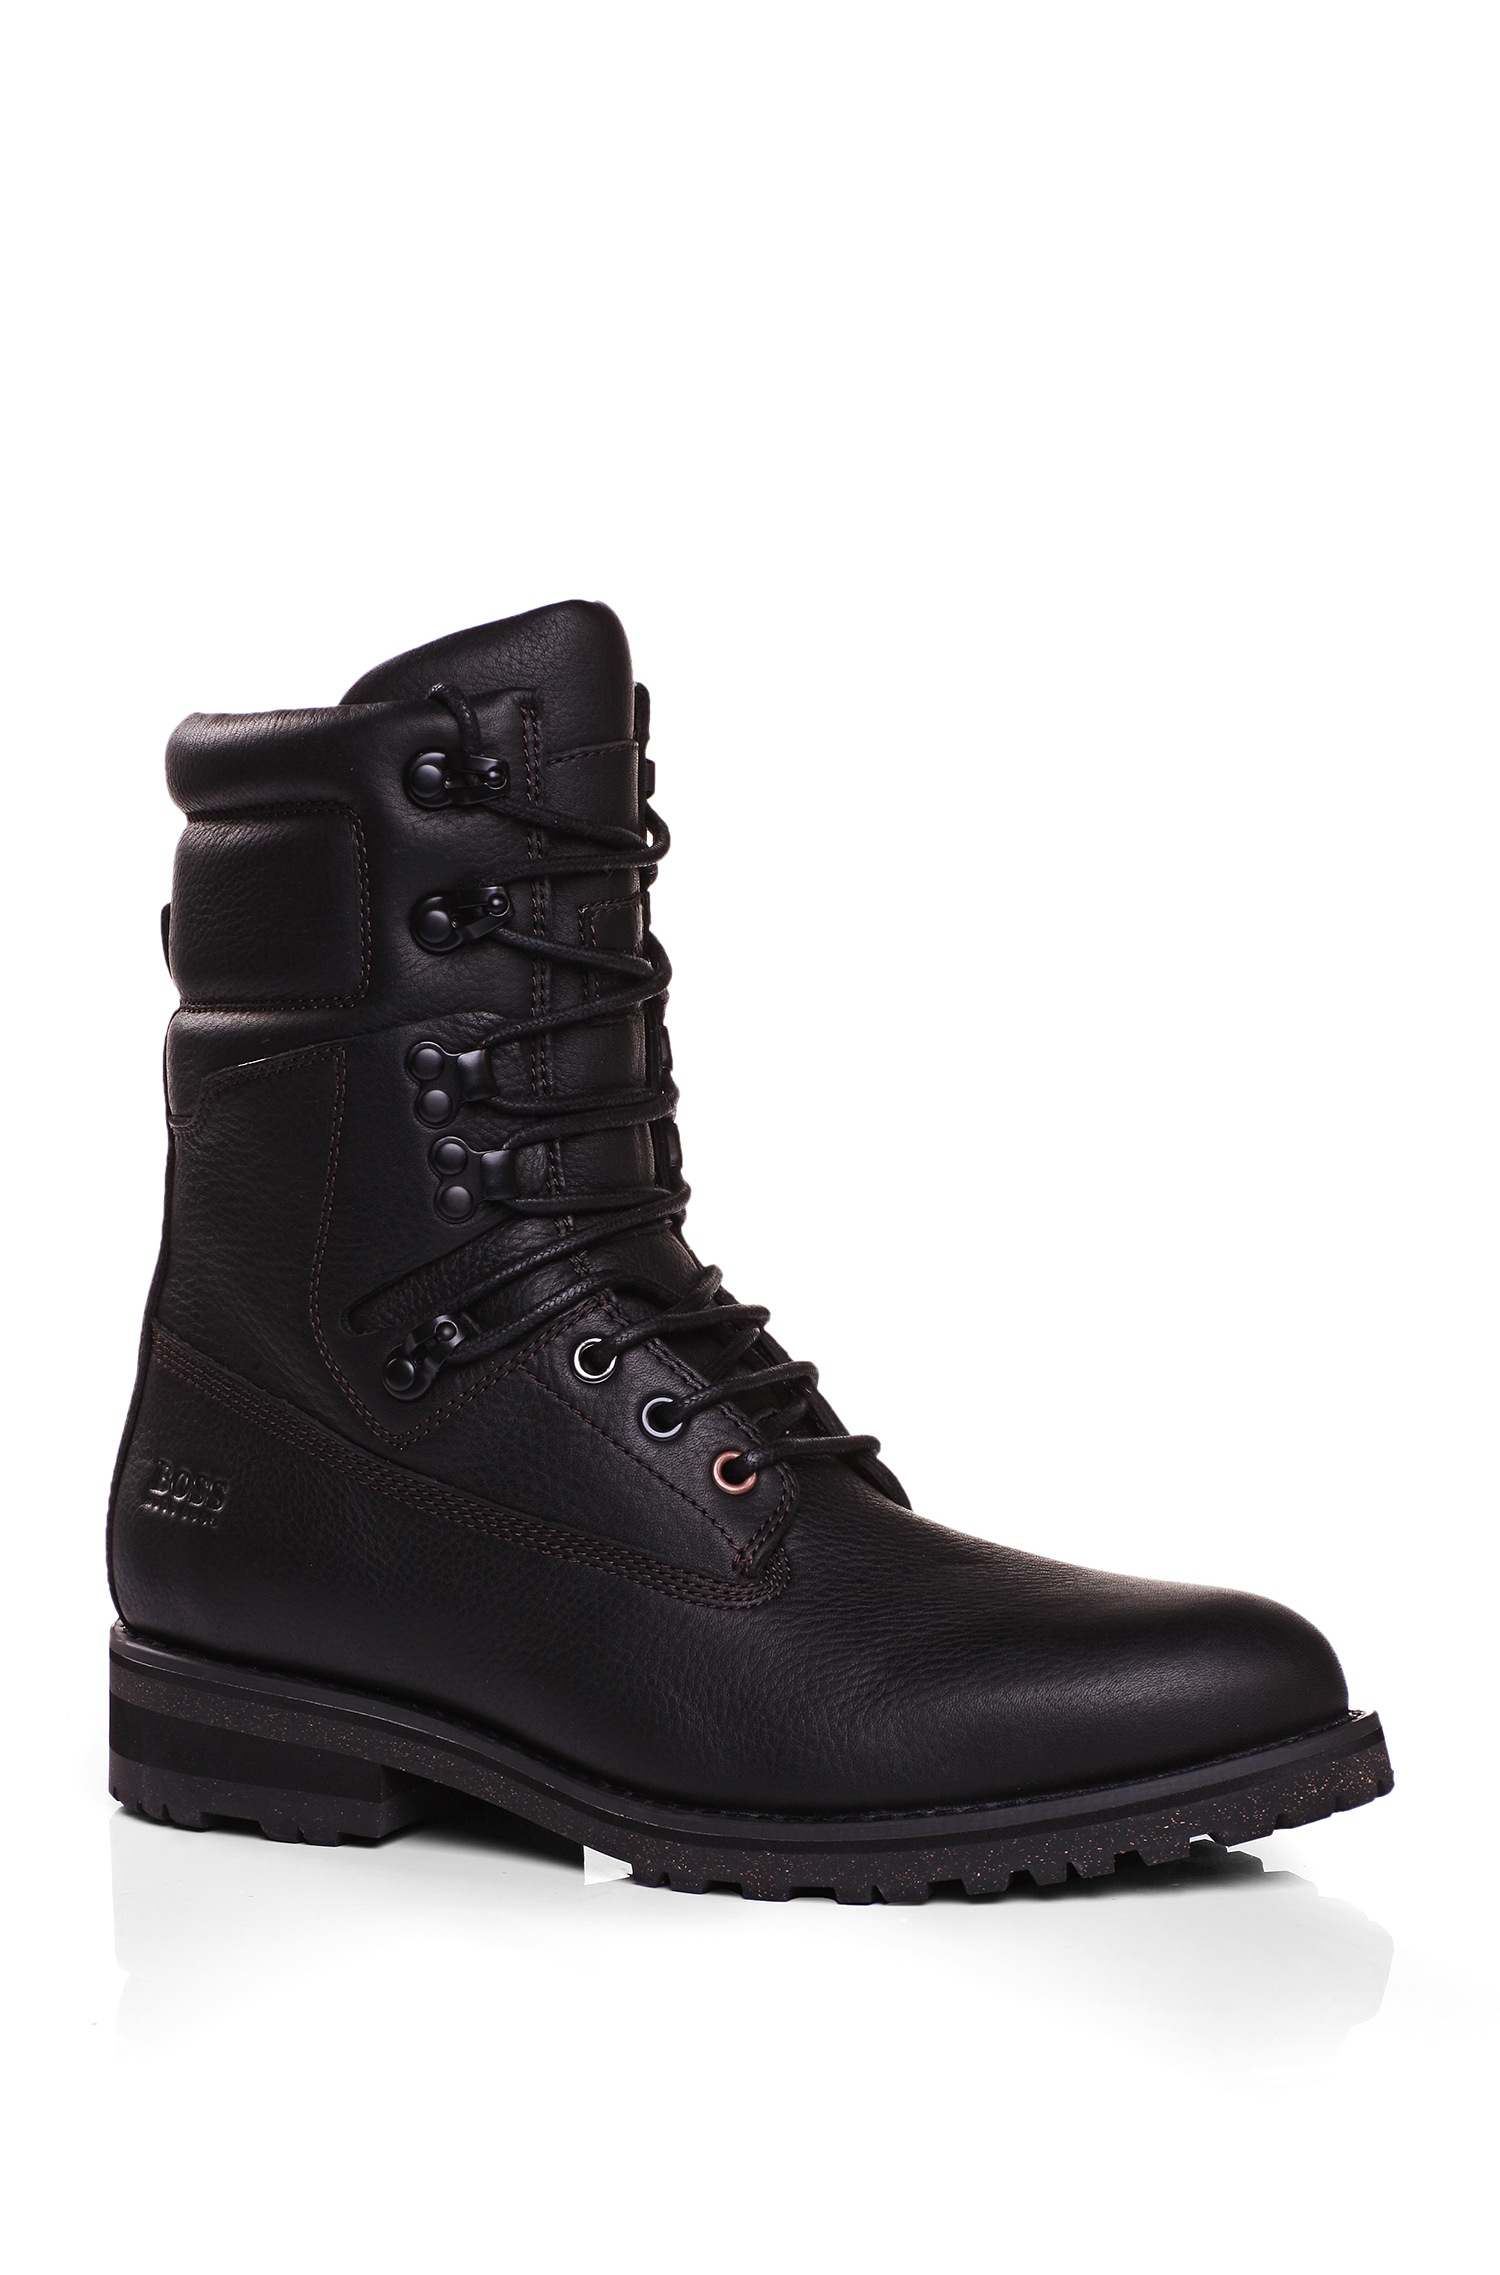 black high top work boots